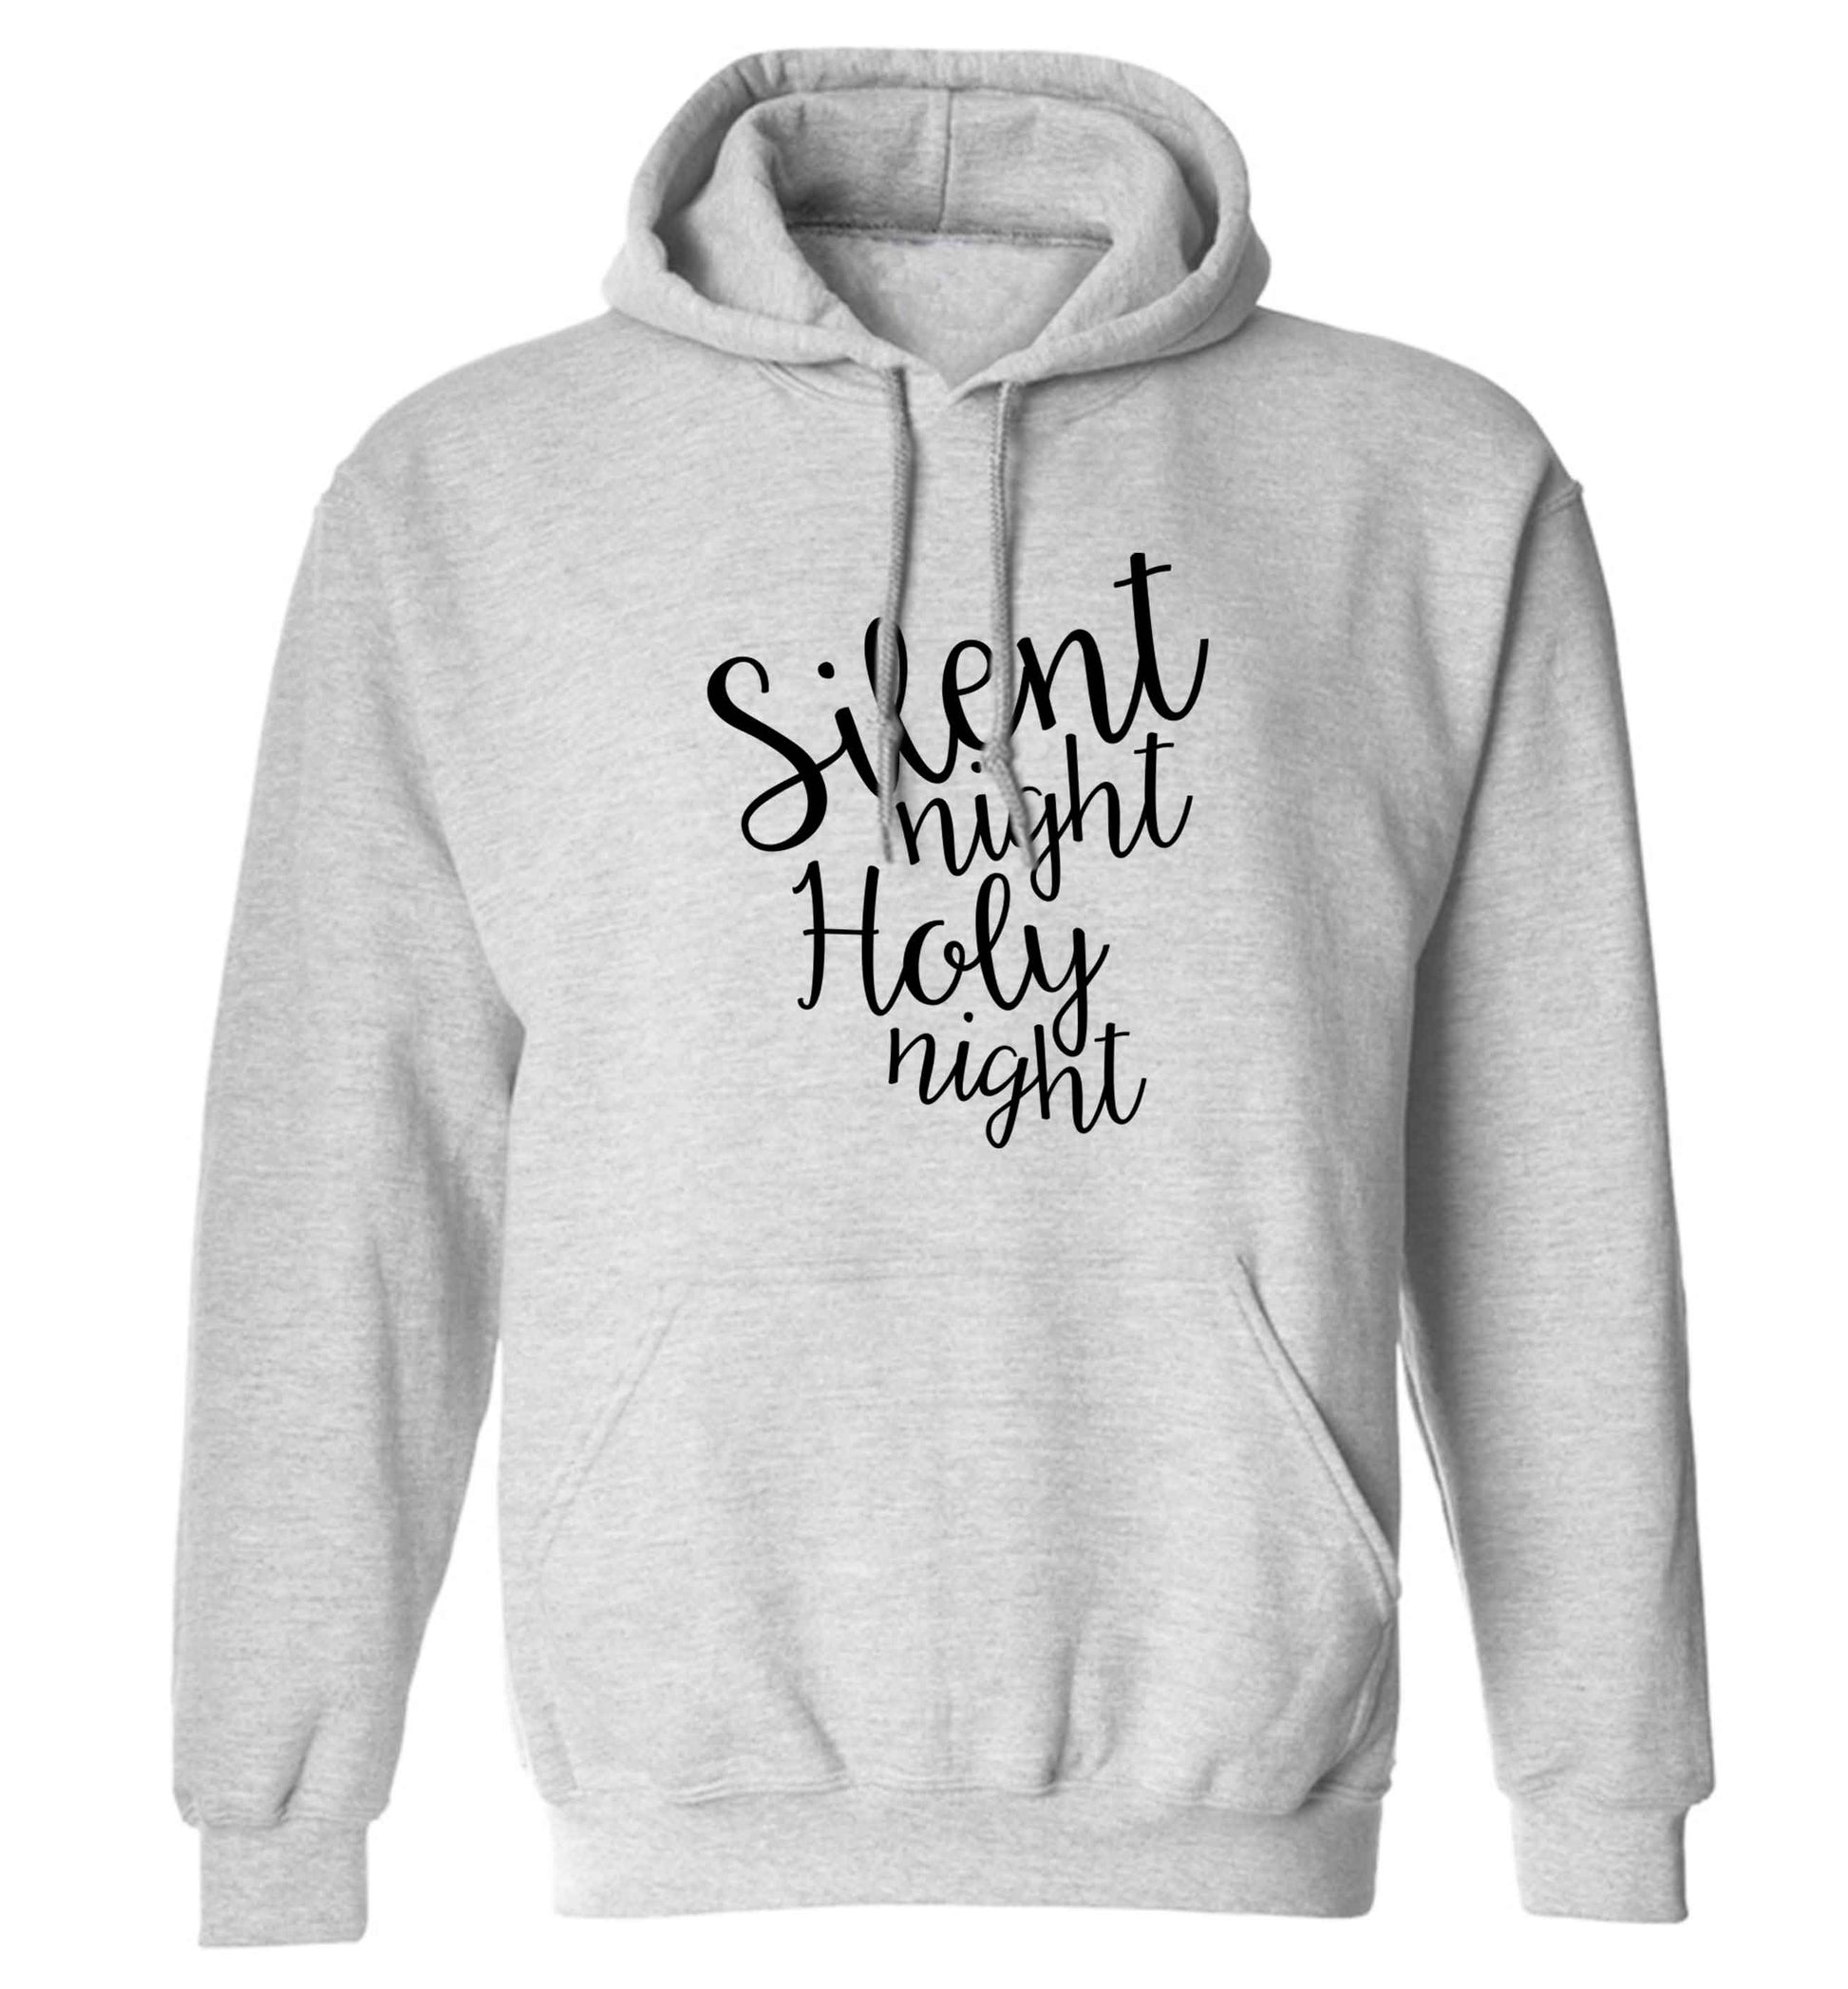 Silent night holy night adults unisex grey hoodie 2XL